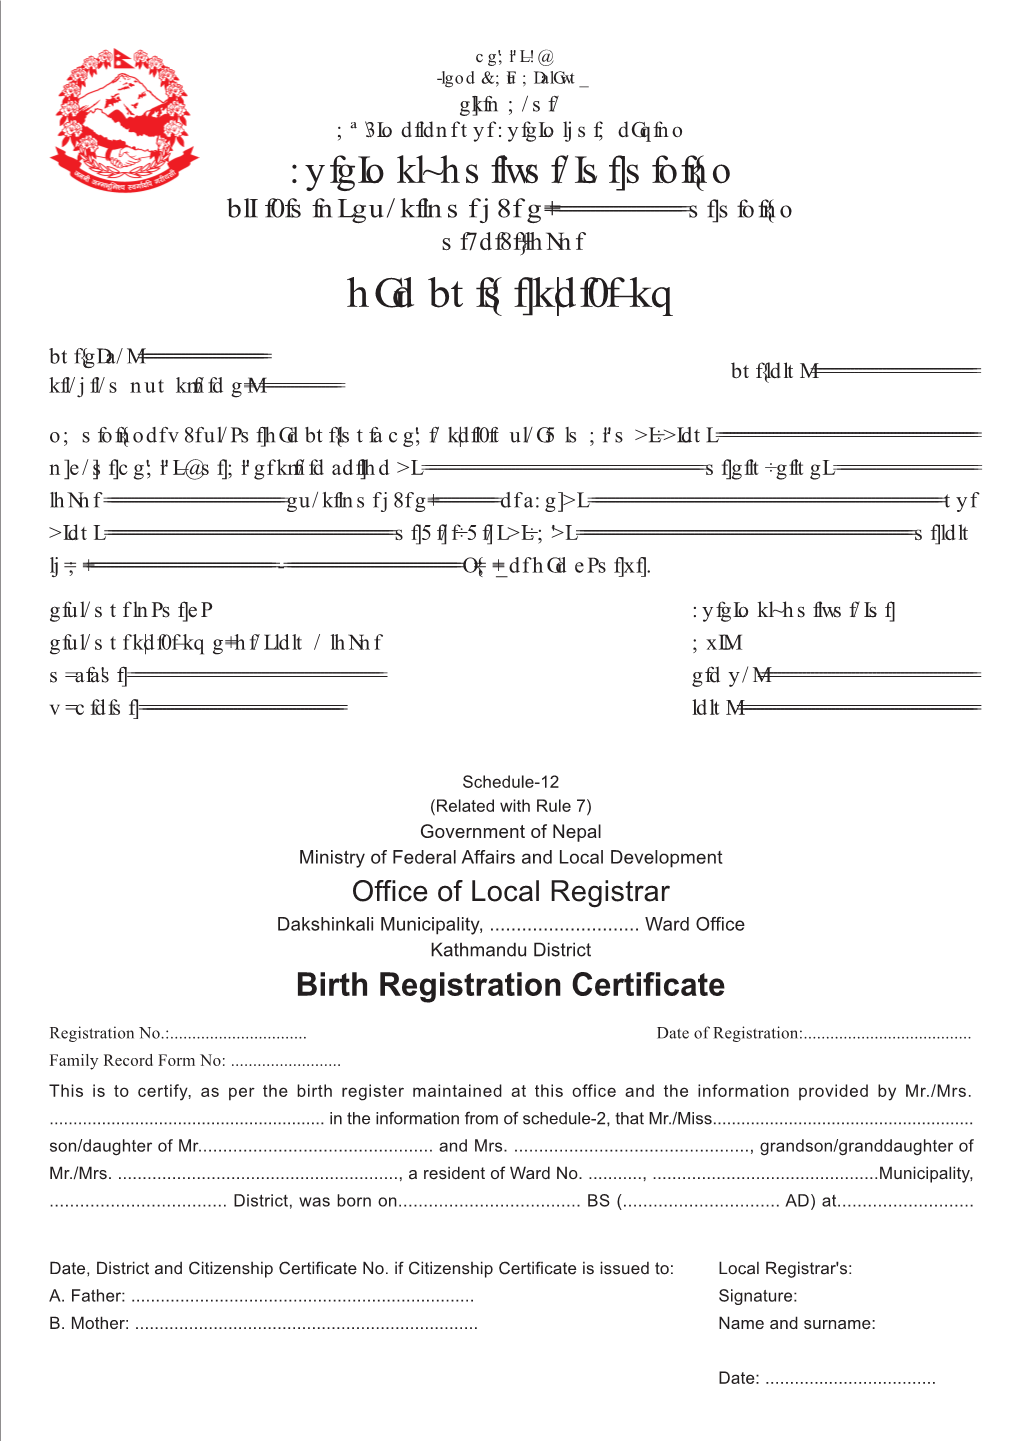 Birth Registration Certificate